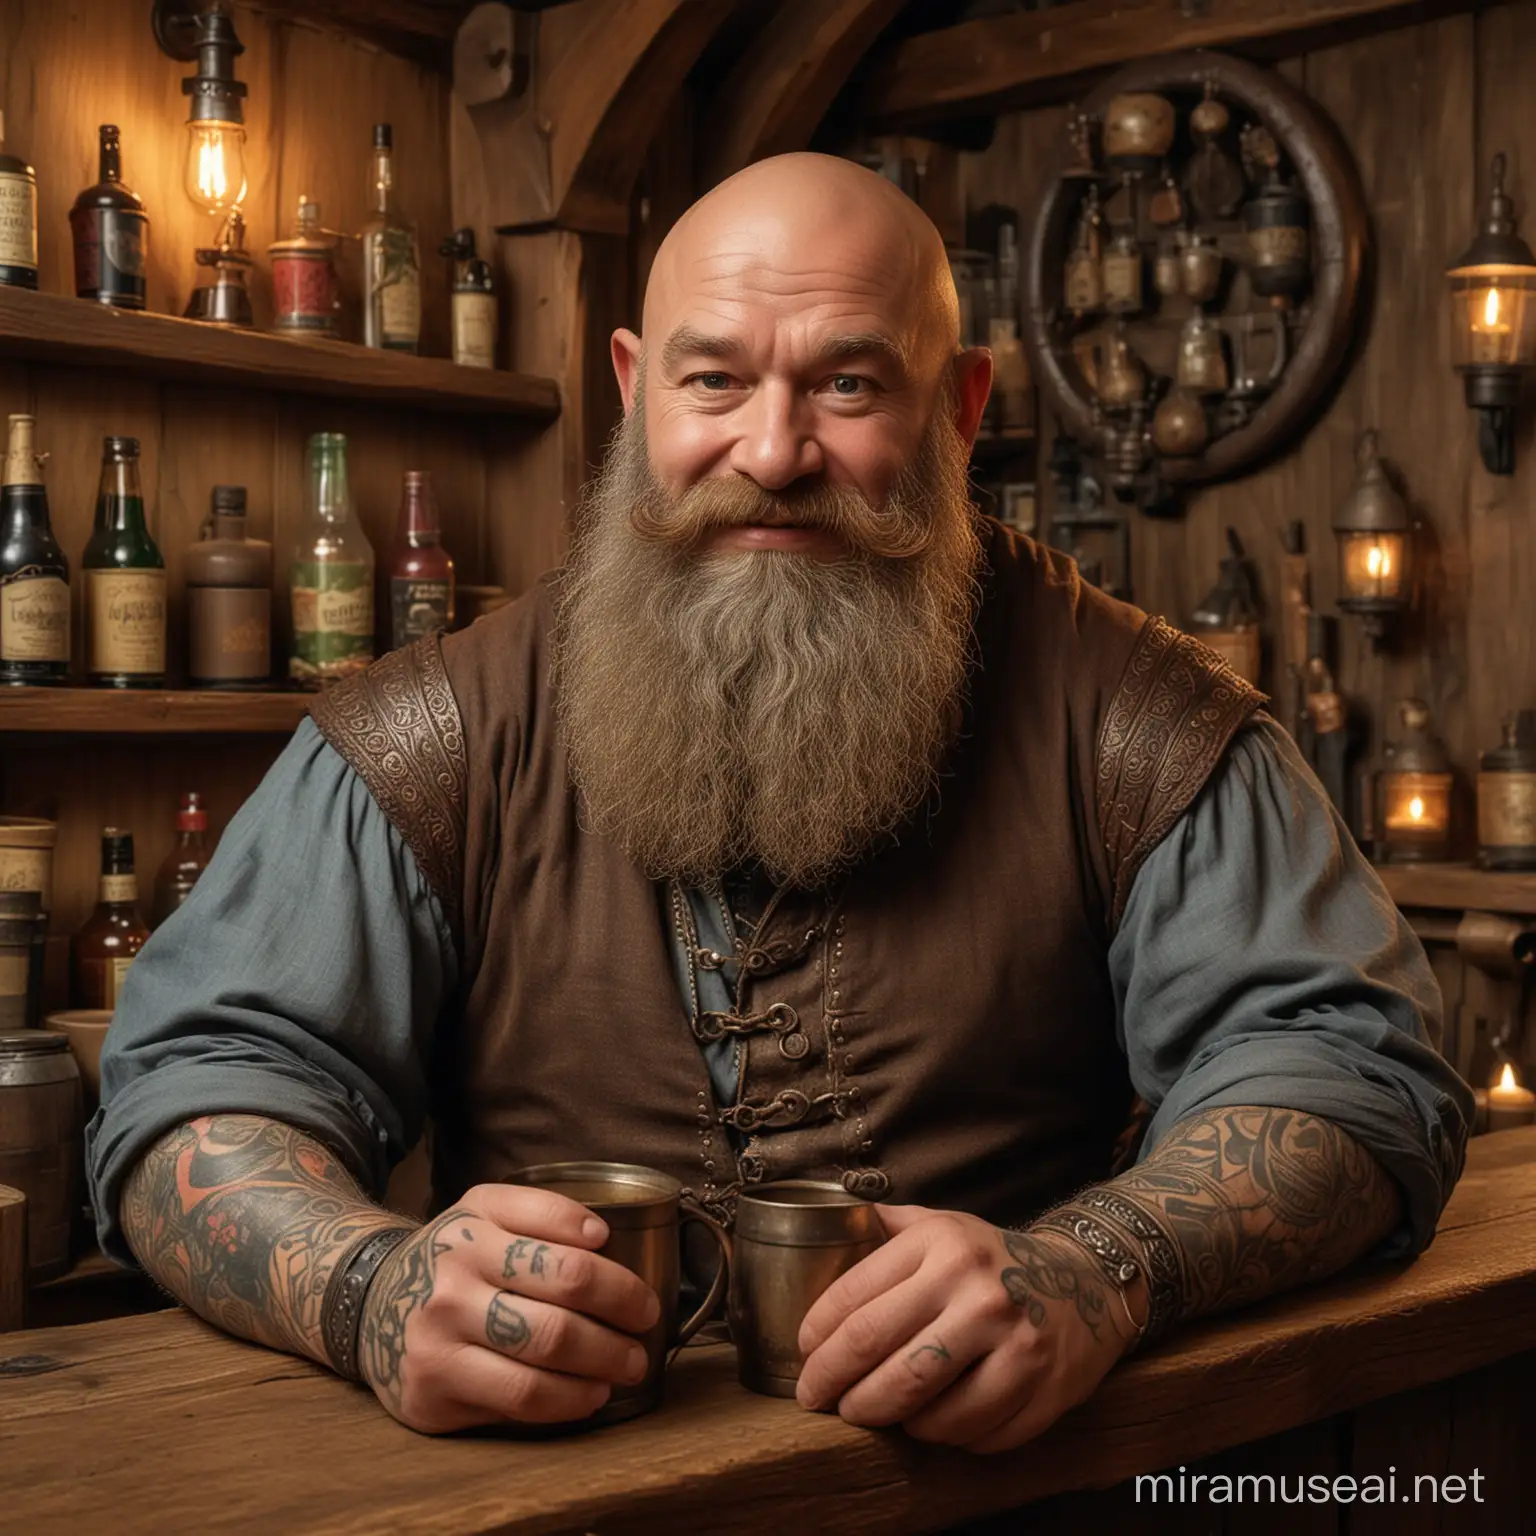 BronzeBearded Dwarf Innkeeper Polishing Wooden Mug in Warm Tavern Ambiance